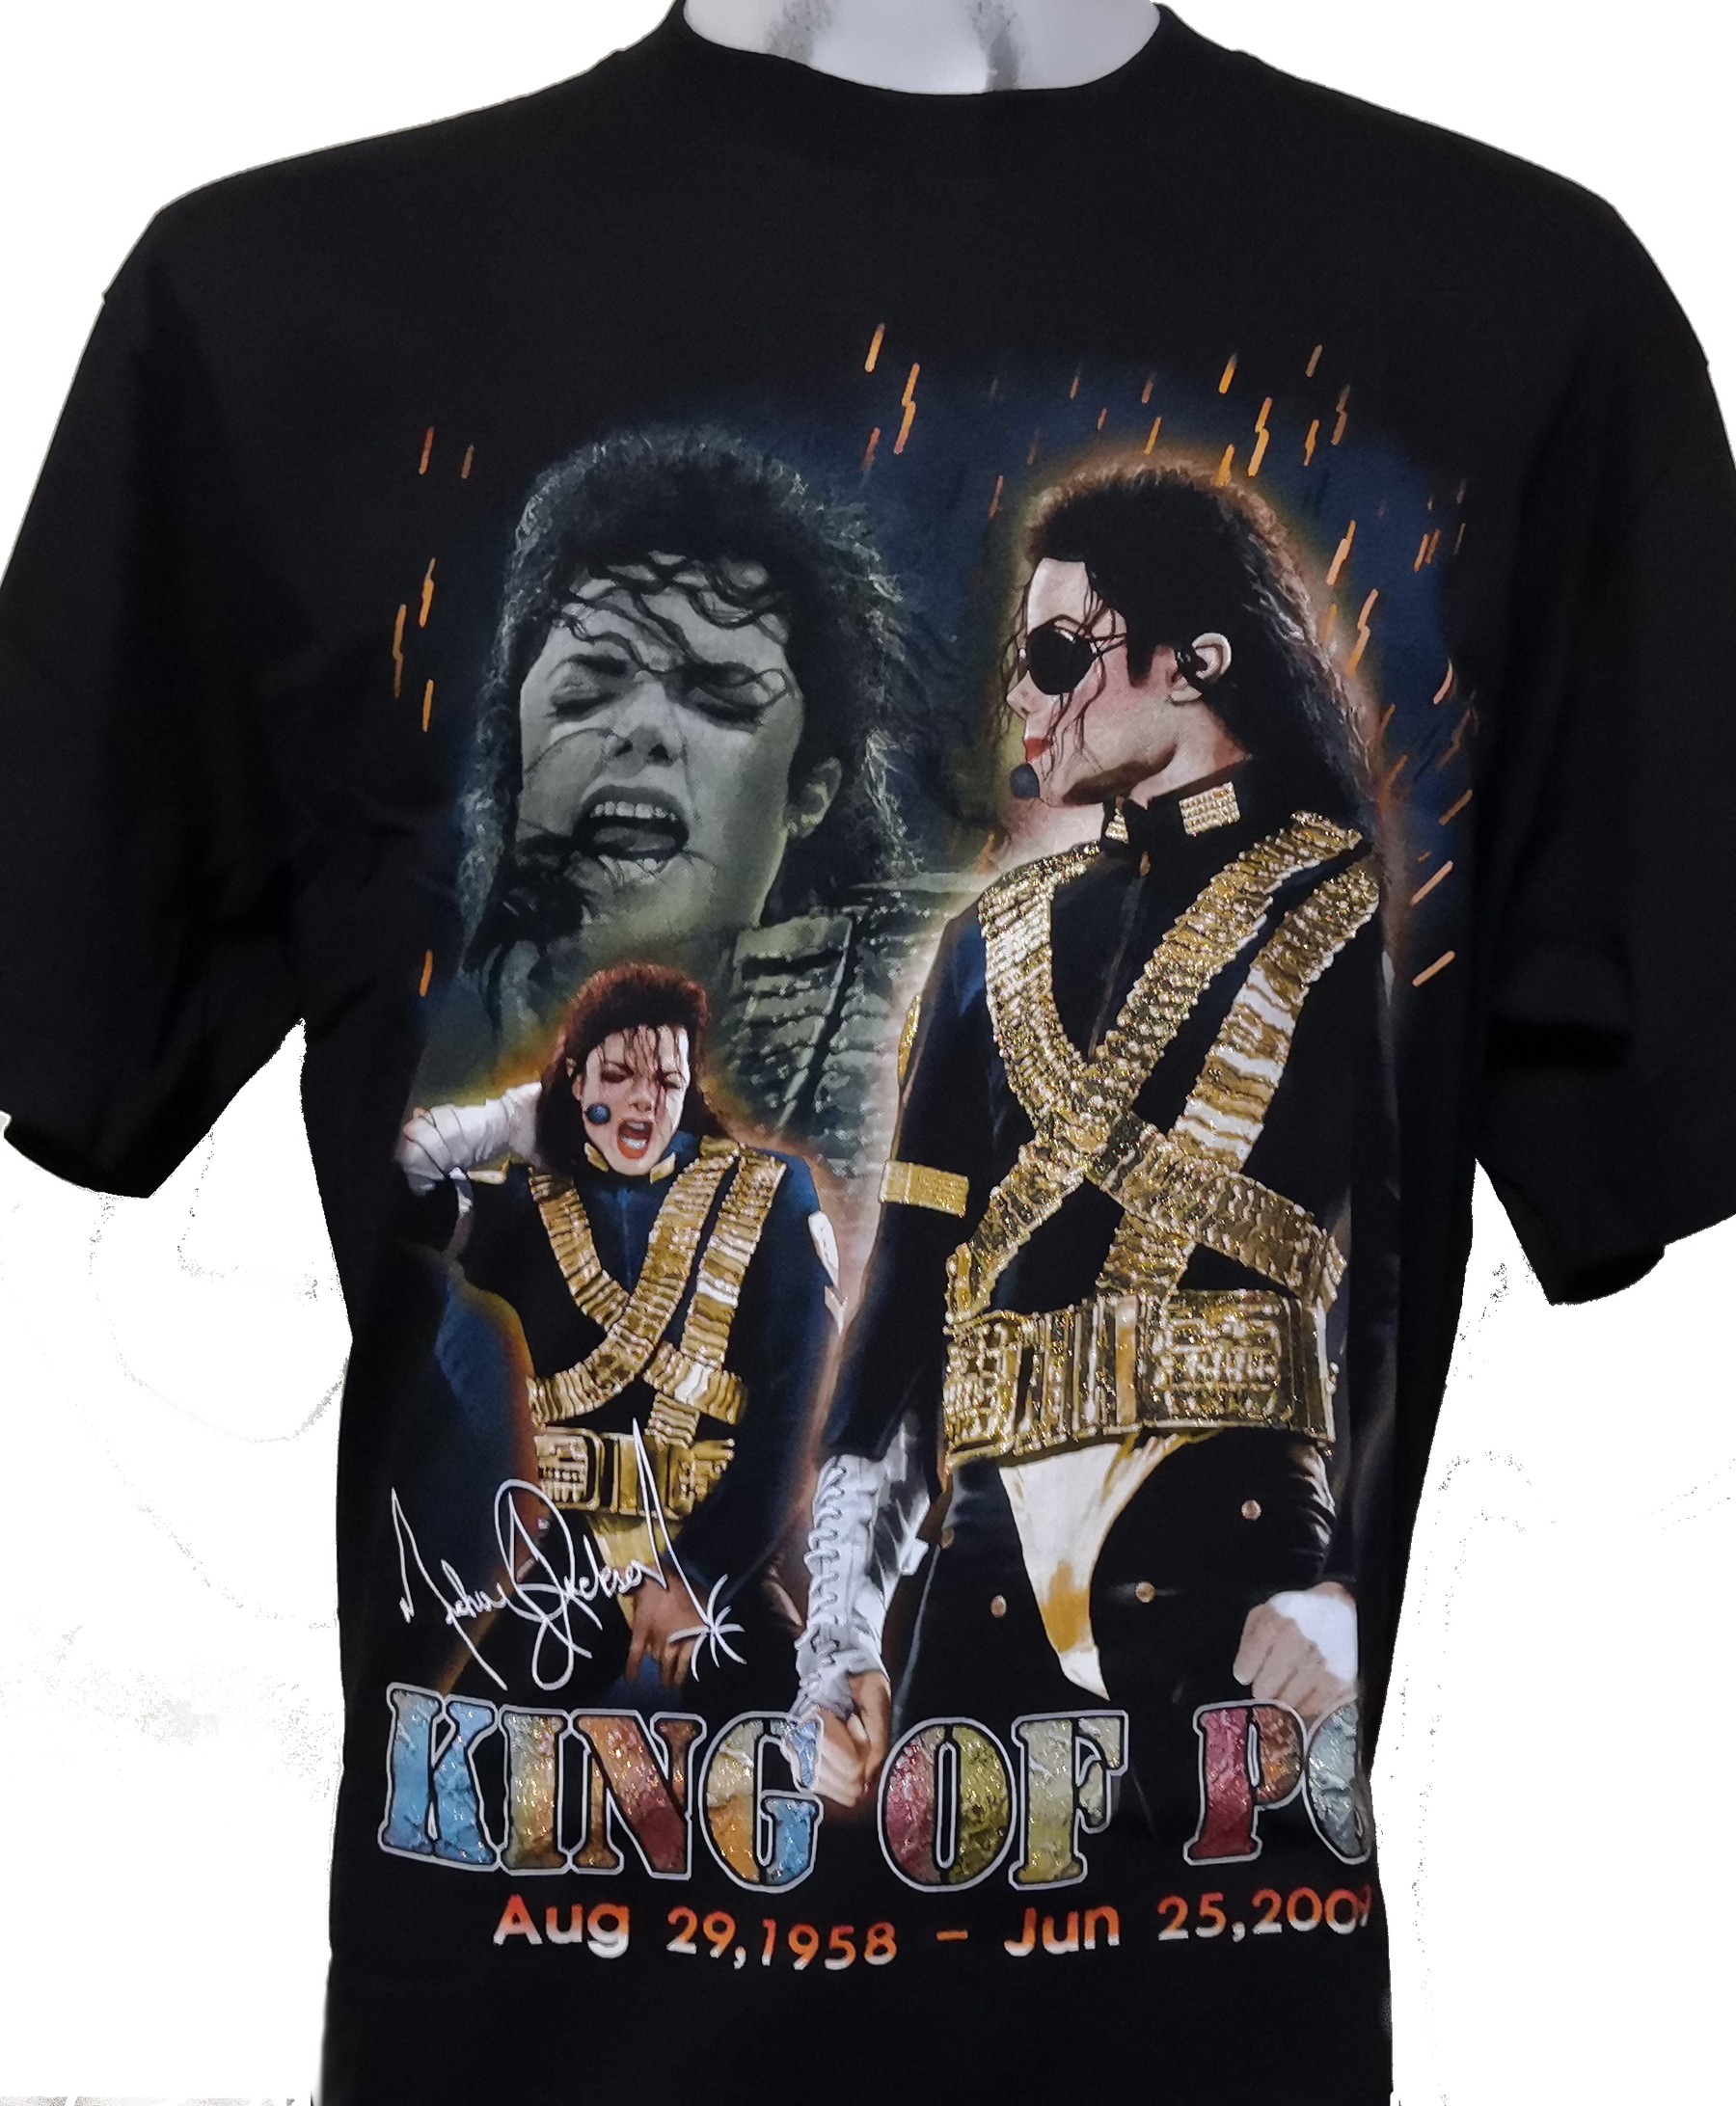 Michael Jackson t-shirt size XL – RoxxBKK